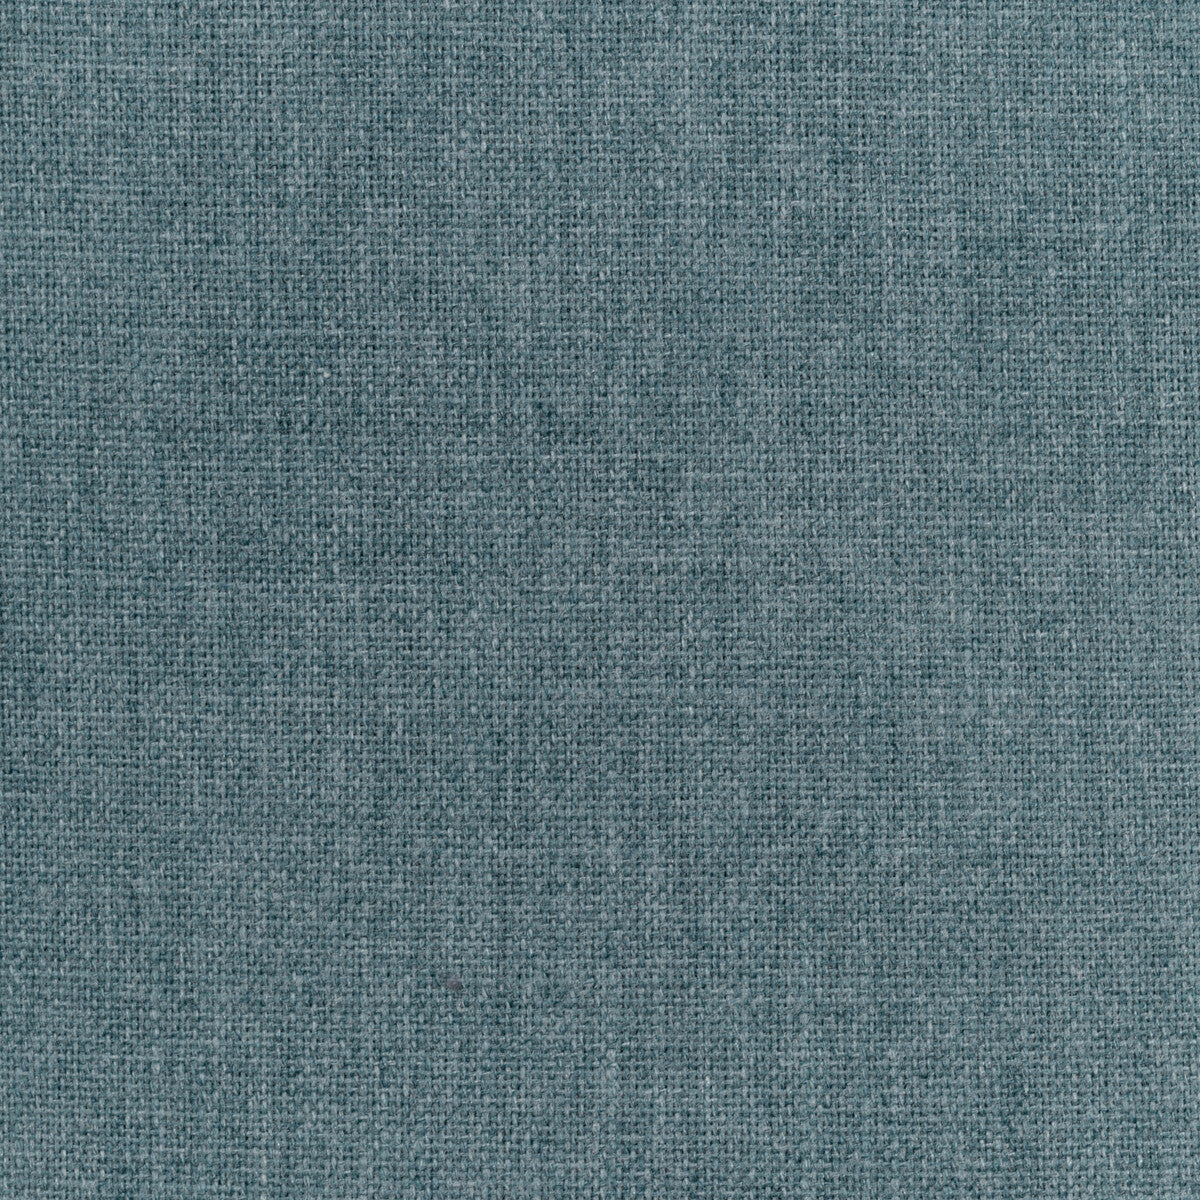 Kravet Smart fabric in 36112-521 color - pattern 36112.521.0 - by Kravet Smart in the Performance Kravetarmor collection